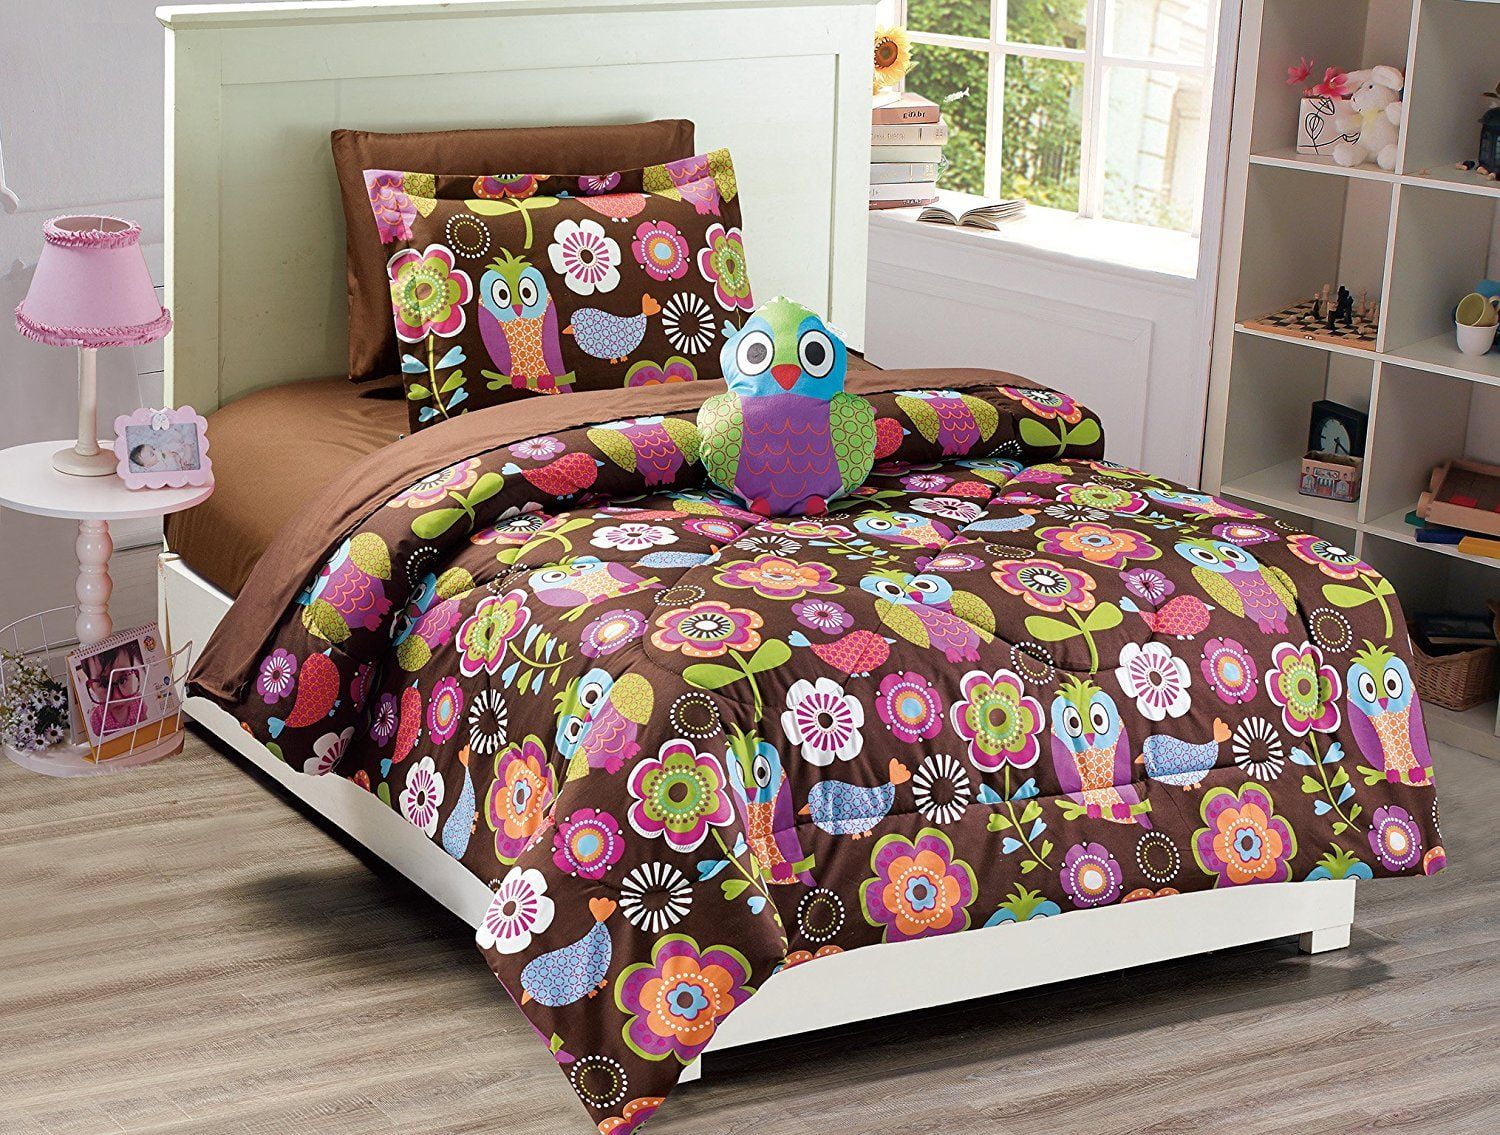 Linen Plus Twin Size 6pc Comforter Set for Girls Elephants Flowers Hearts White Purple Pink Orange New 